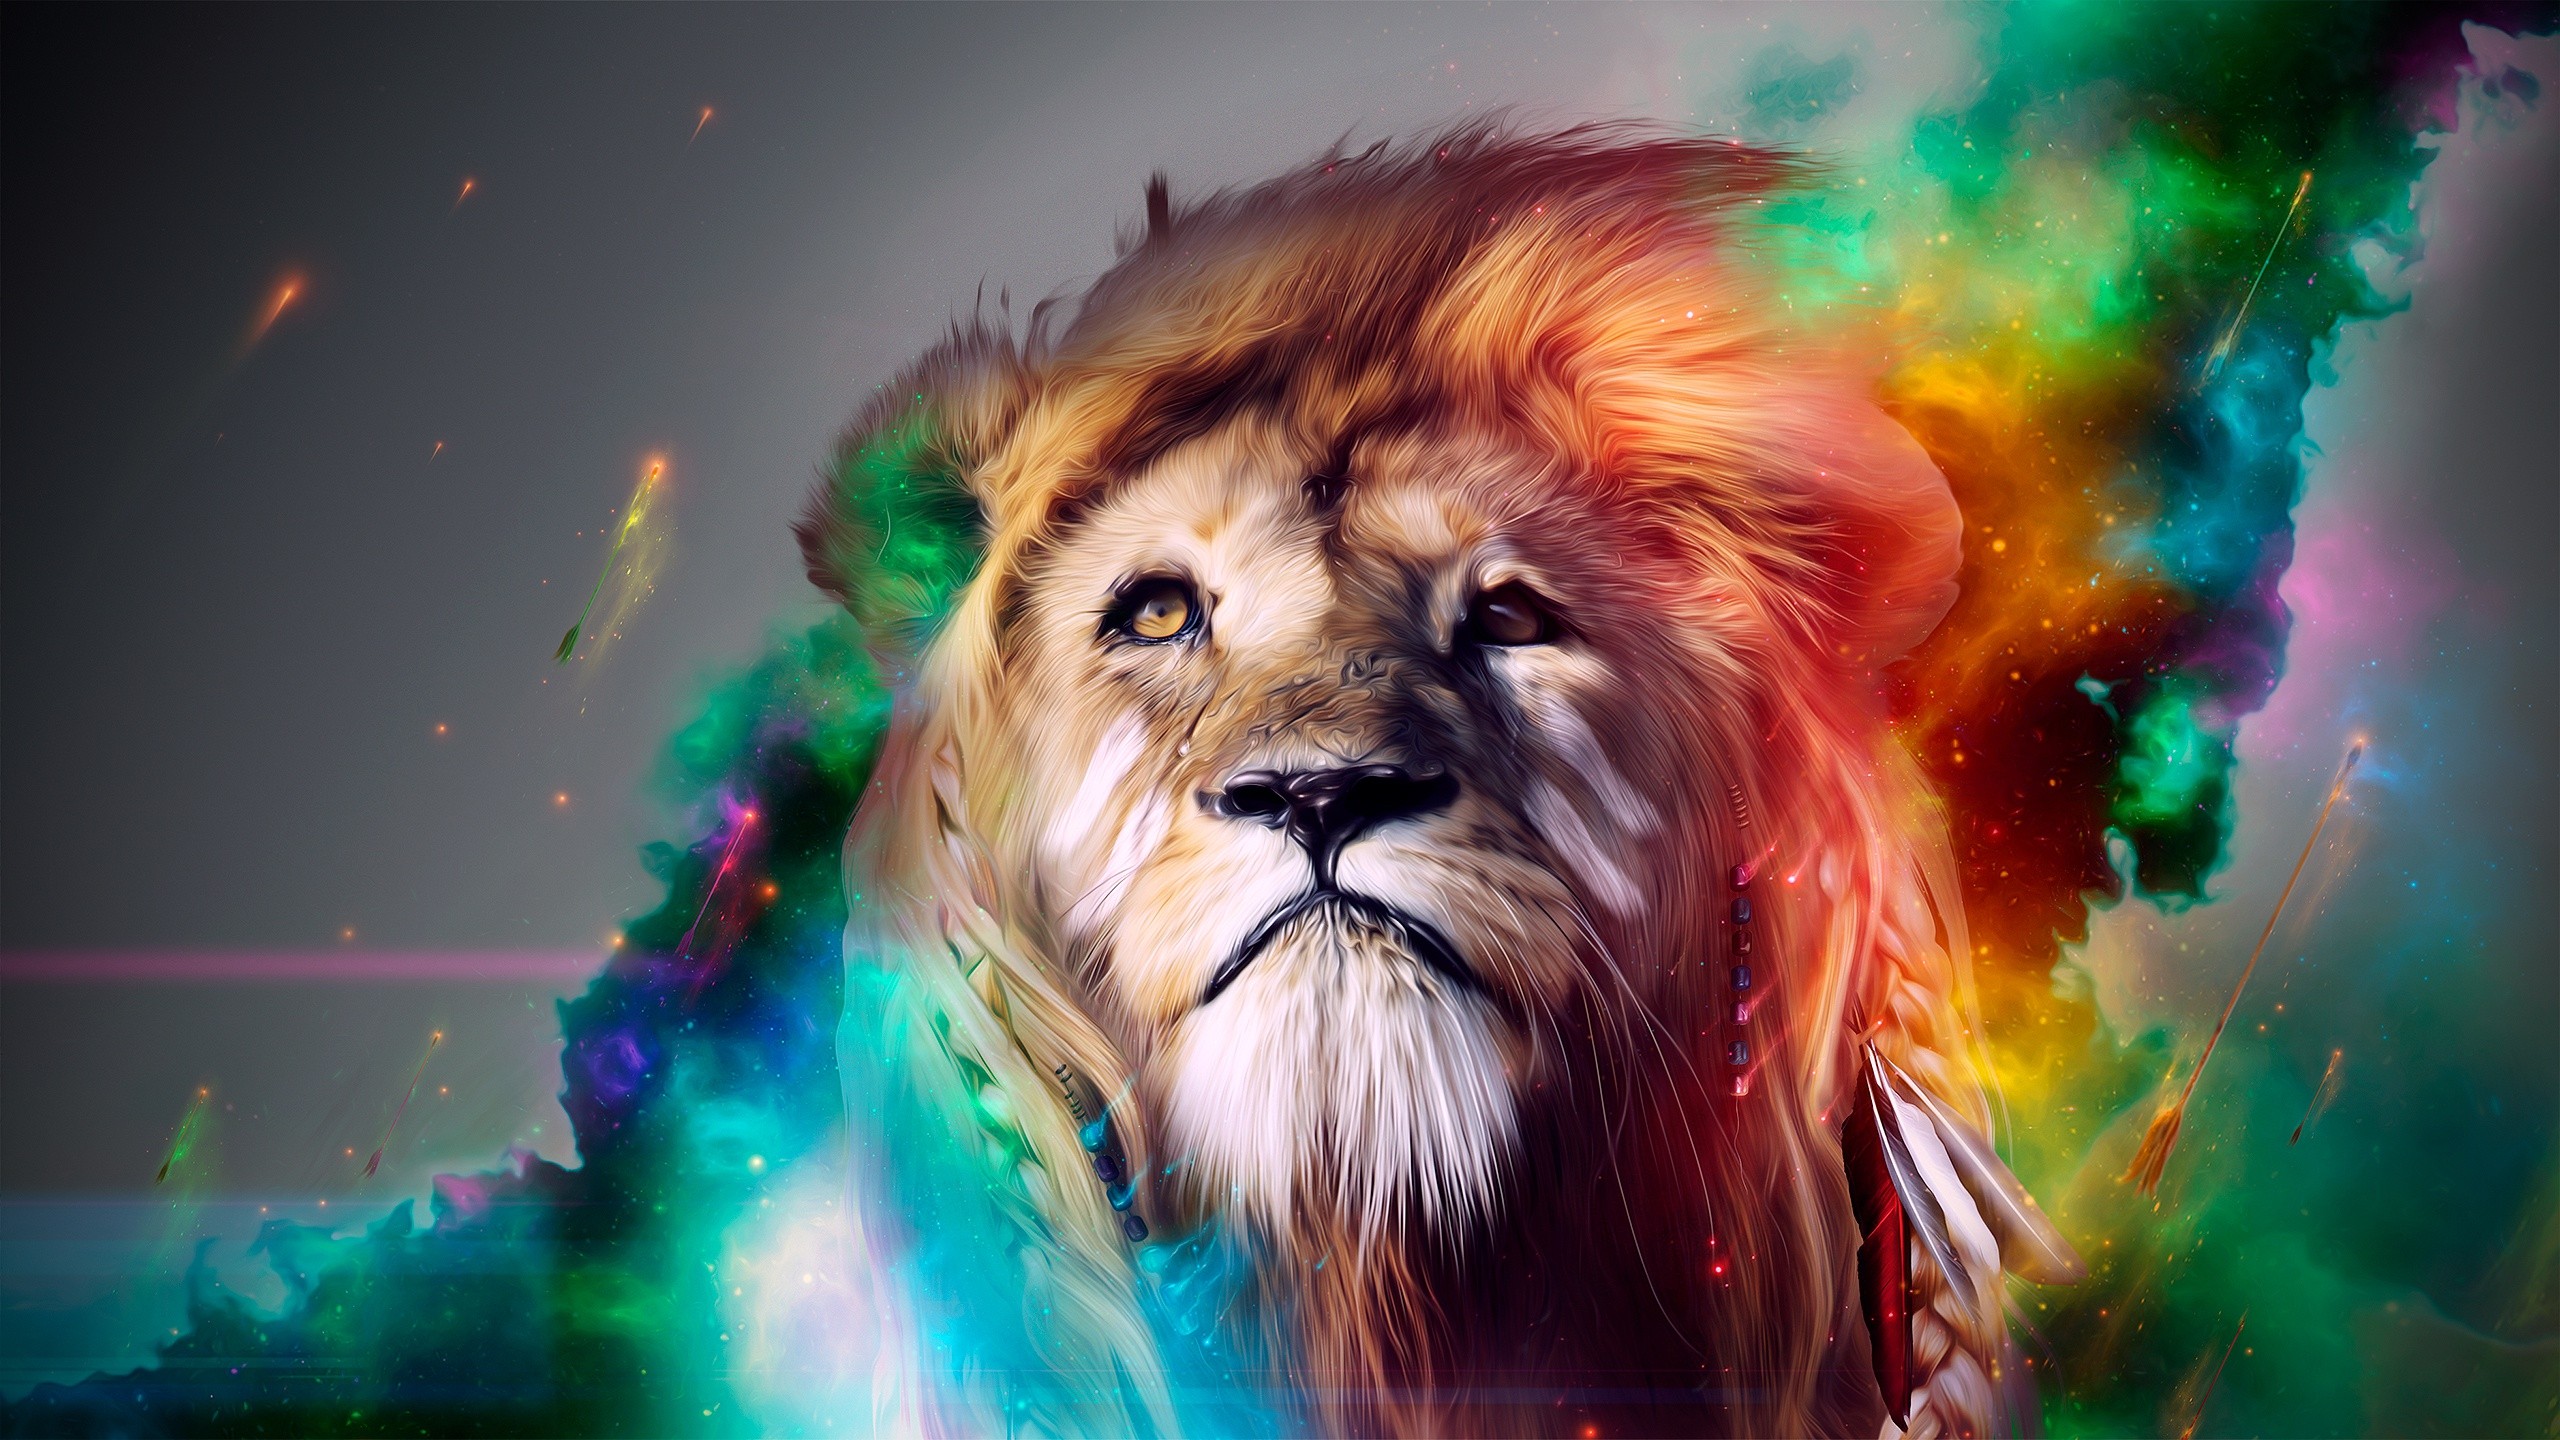 Desktop 3d Lion Mobile Background Wallpaper 1280x1024